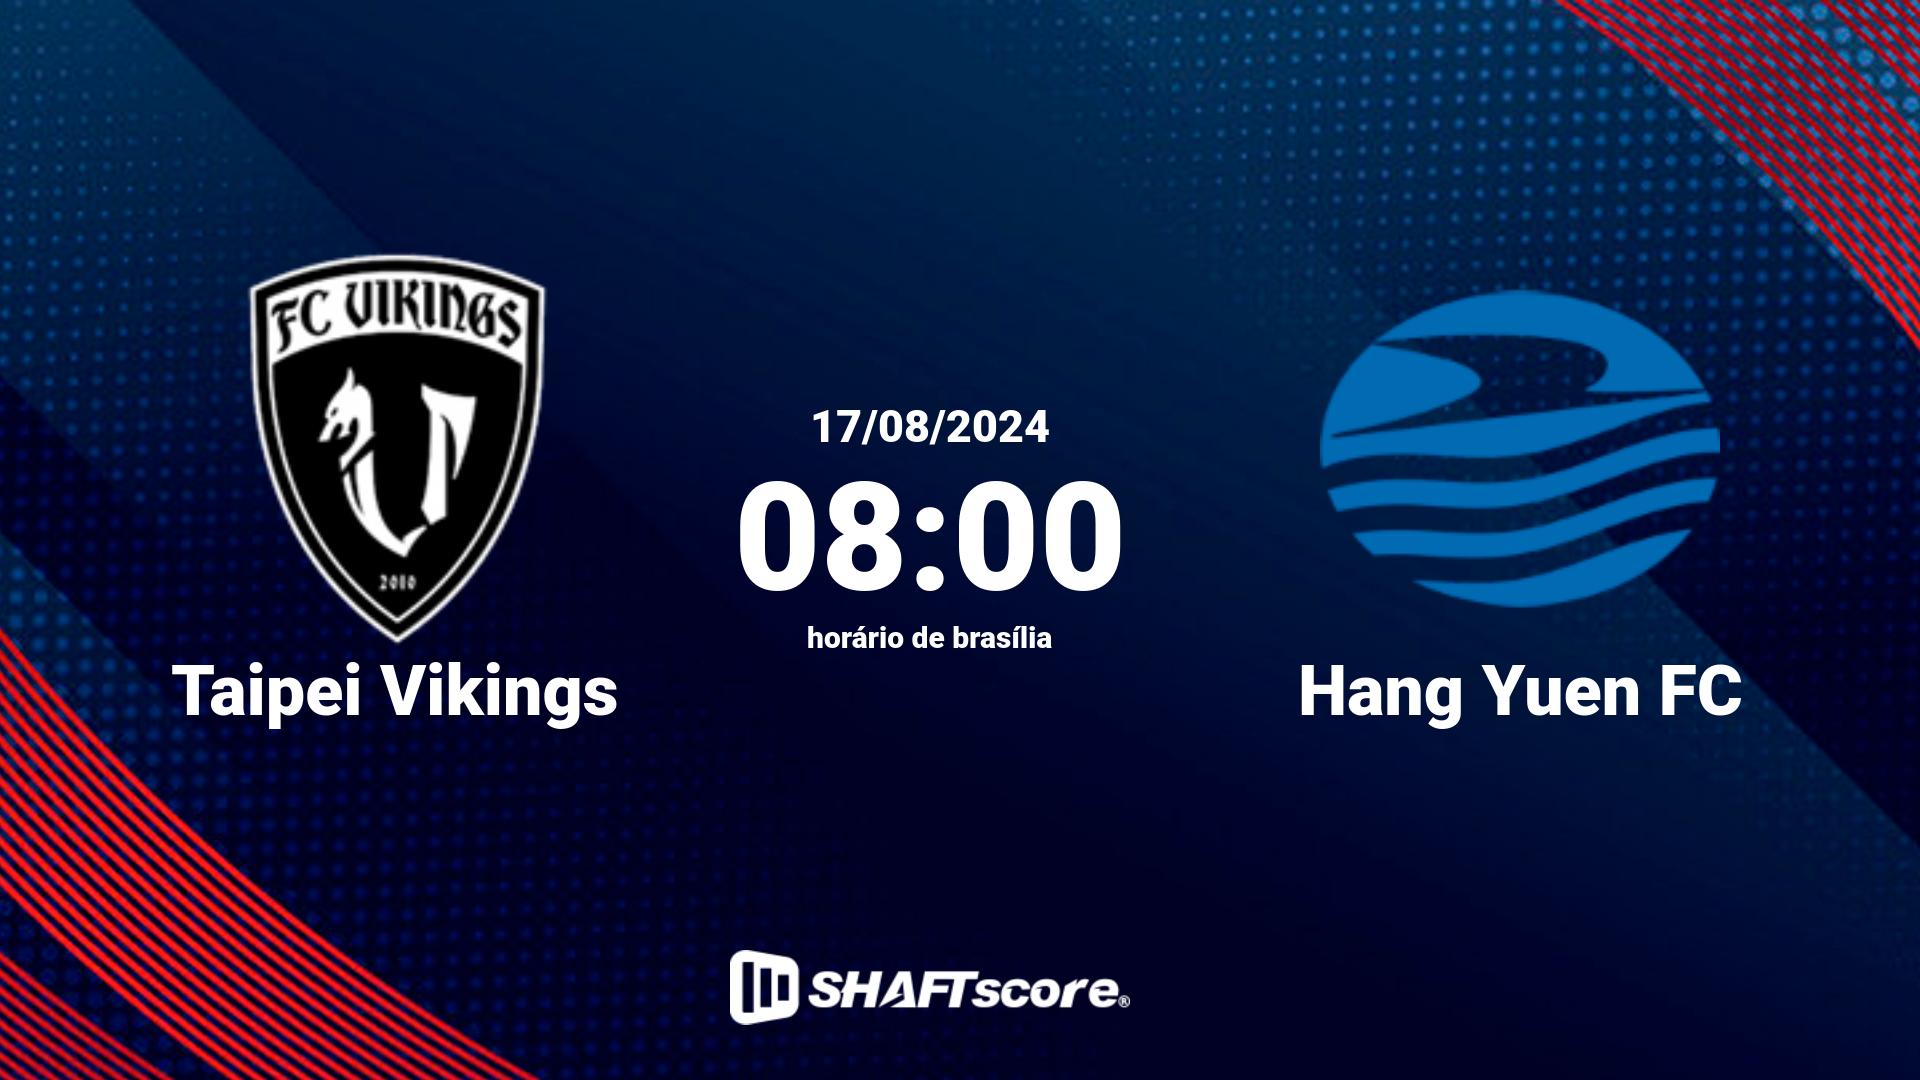 Estatísticas do jogo Taipei Vikings vs Hang Yuen FC 17.08 08:00